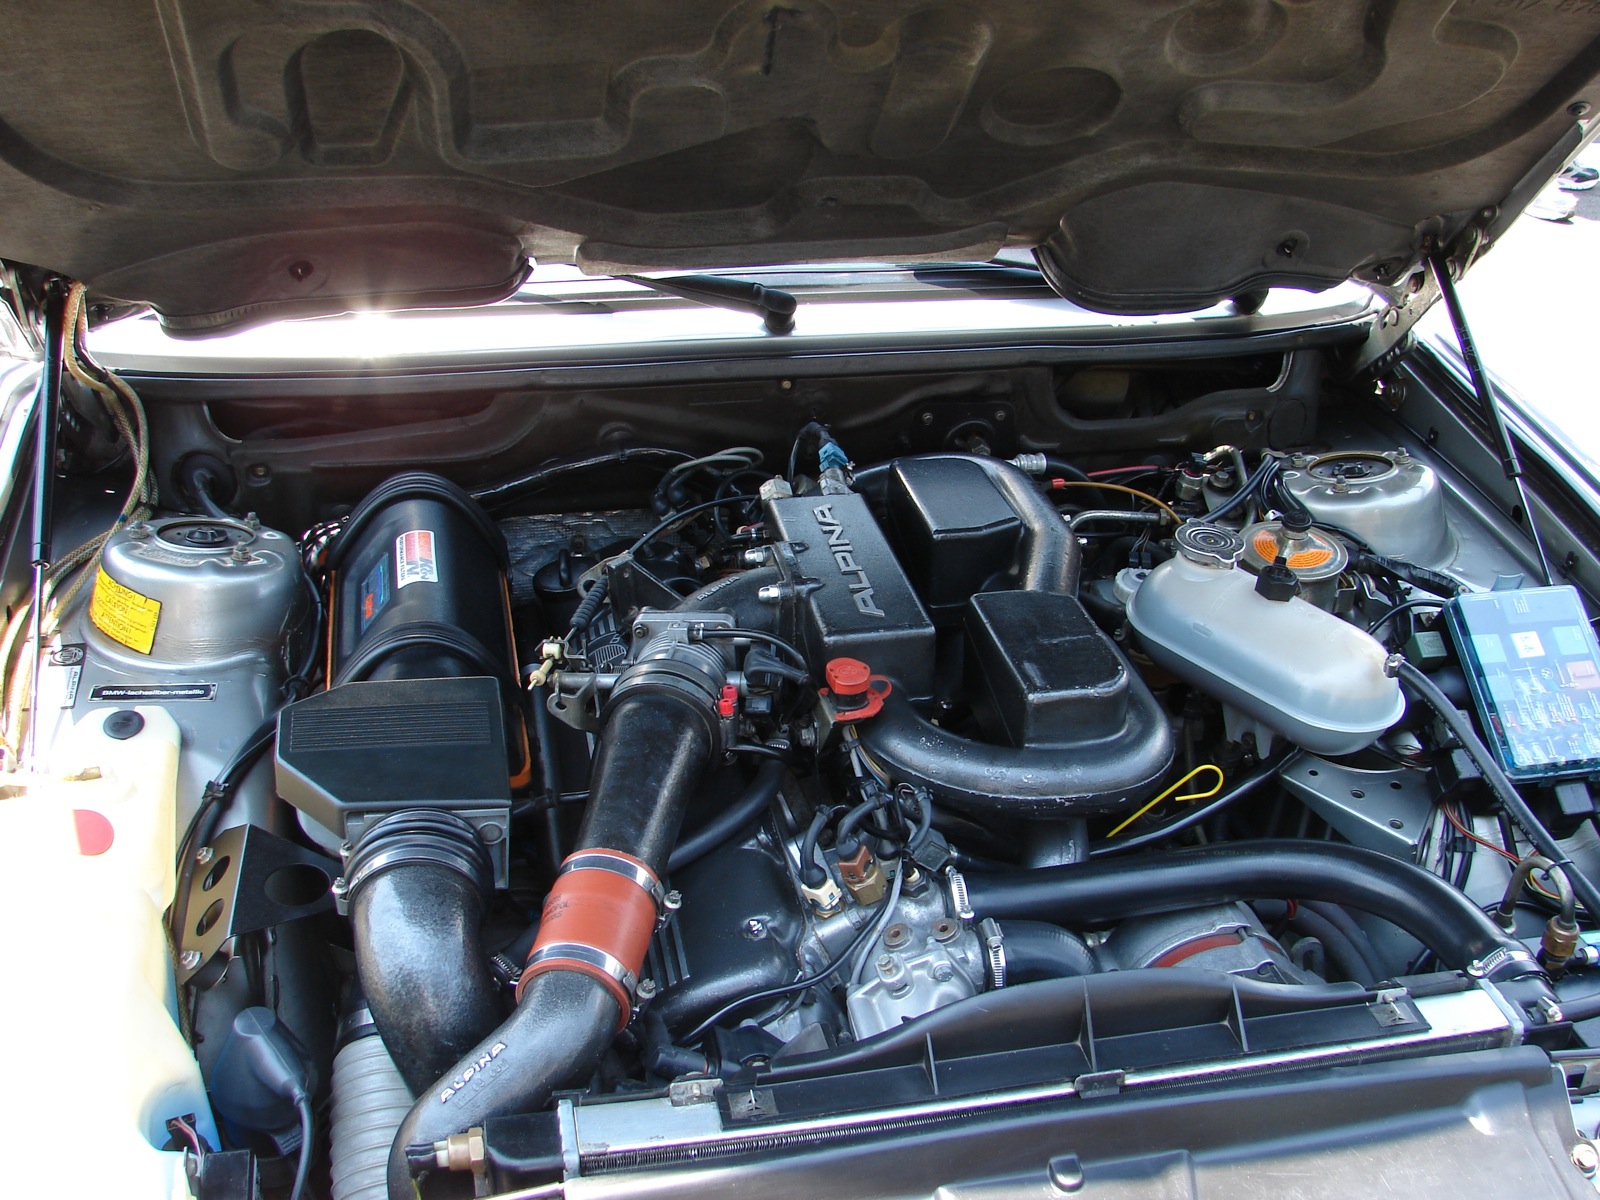 Alpina B7 turbo motor, Check out that intake manifold! | Flickr ...